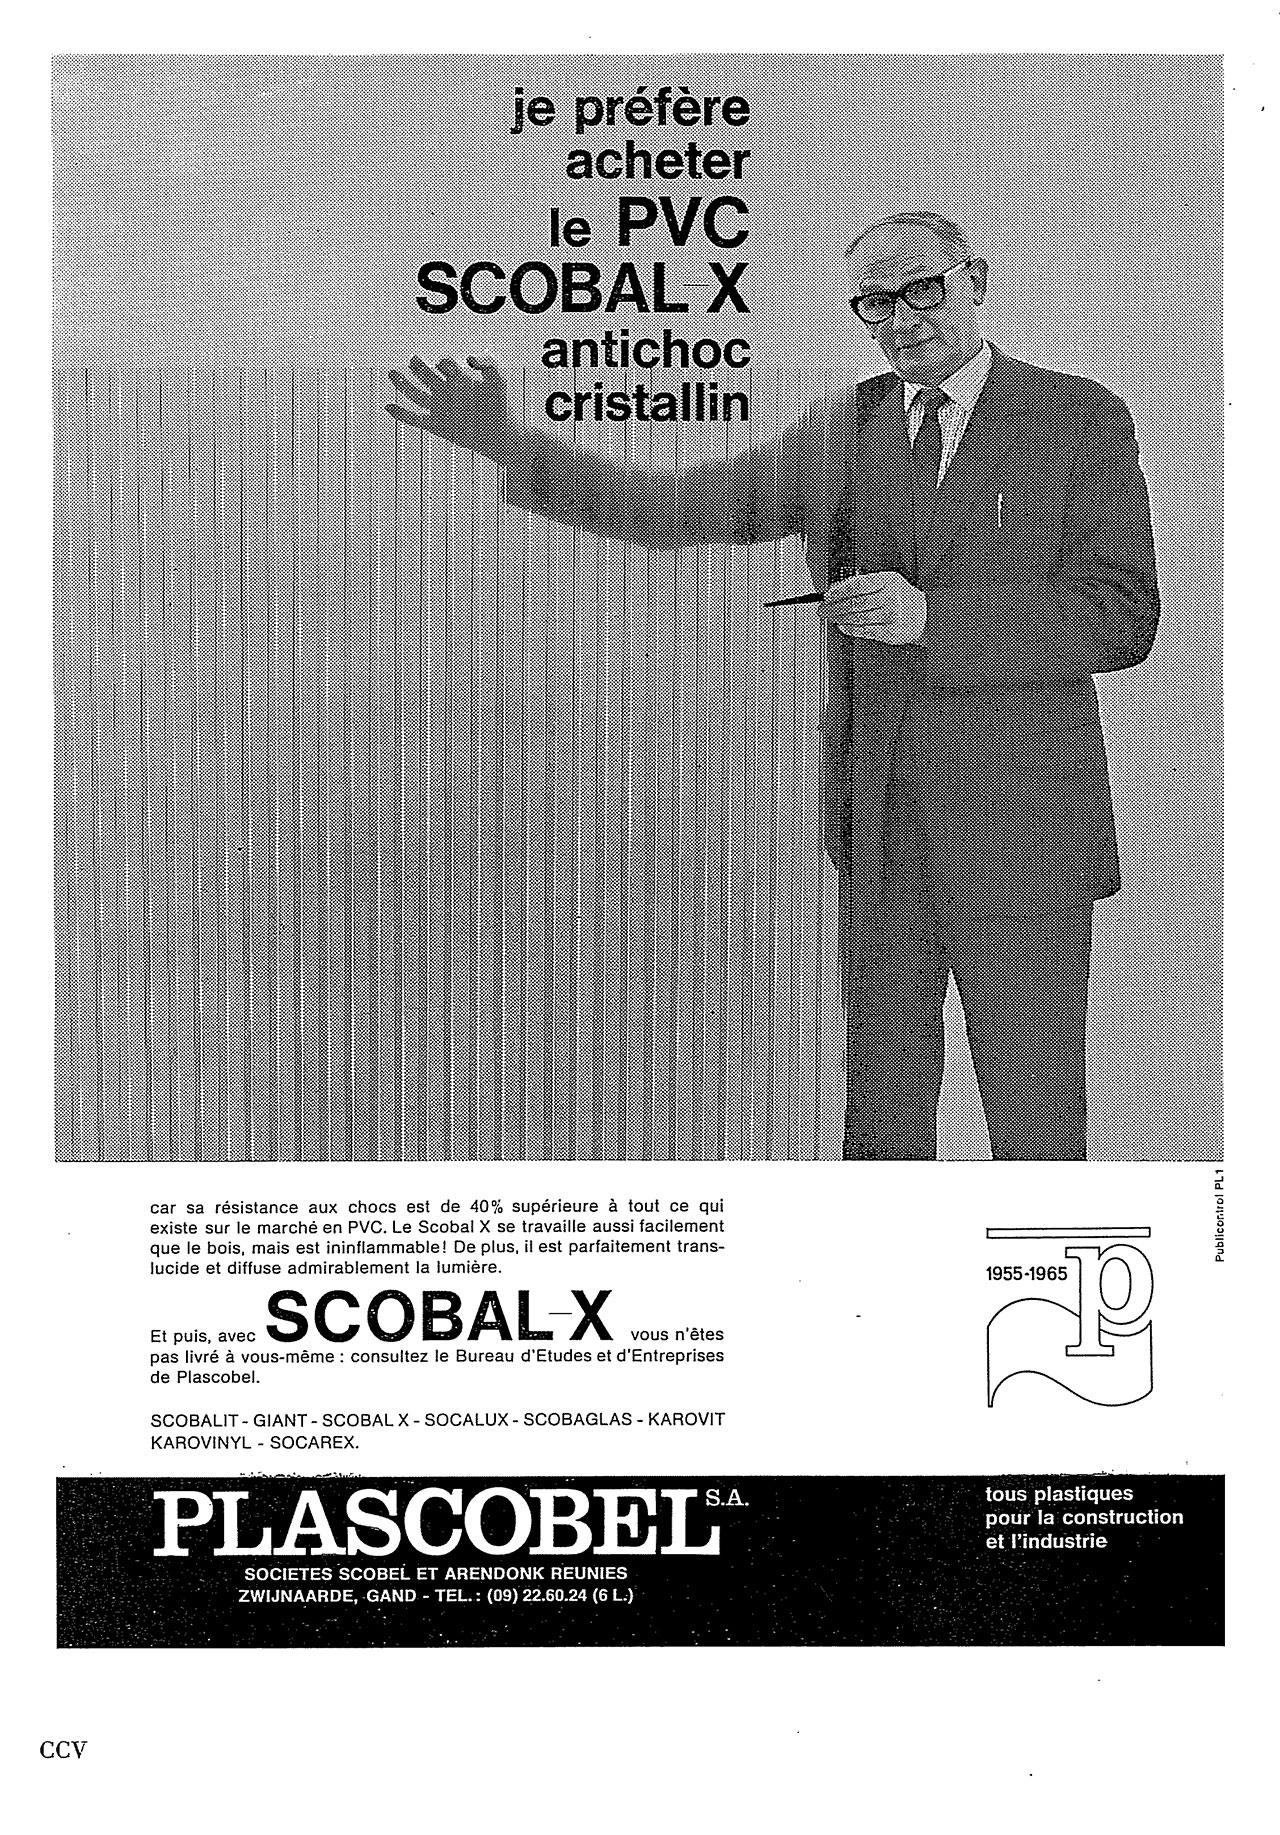 Scobal-X